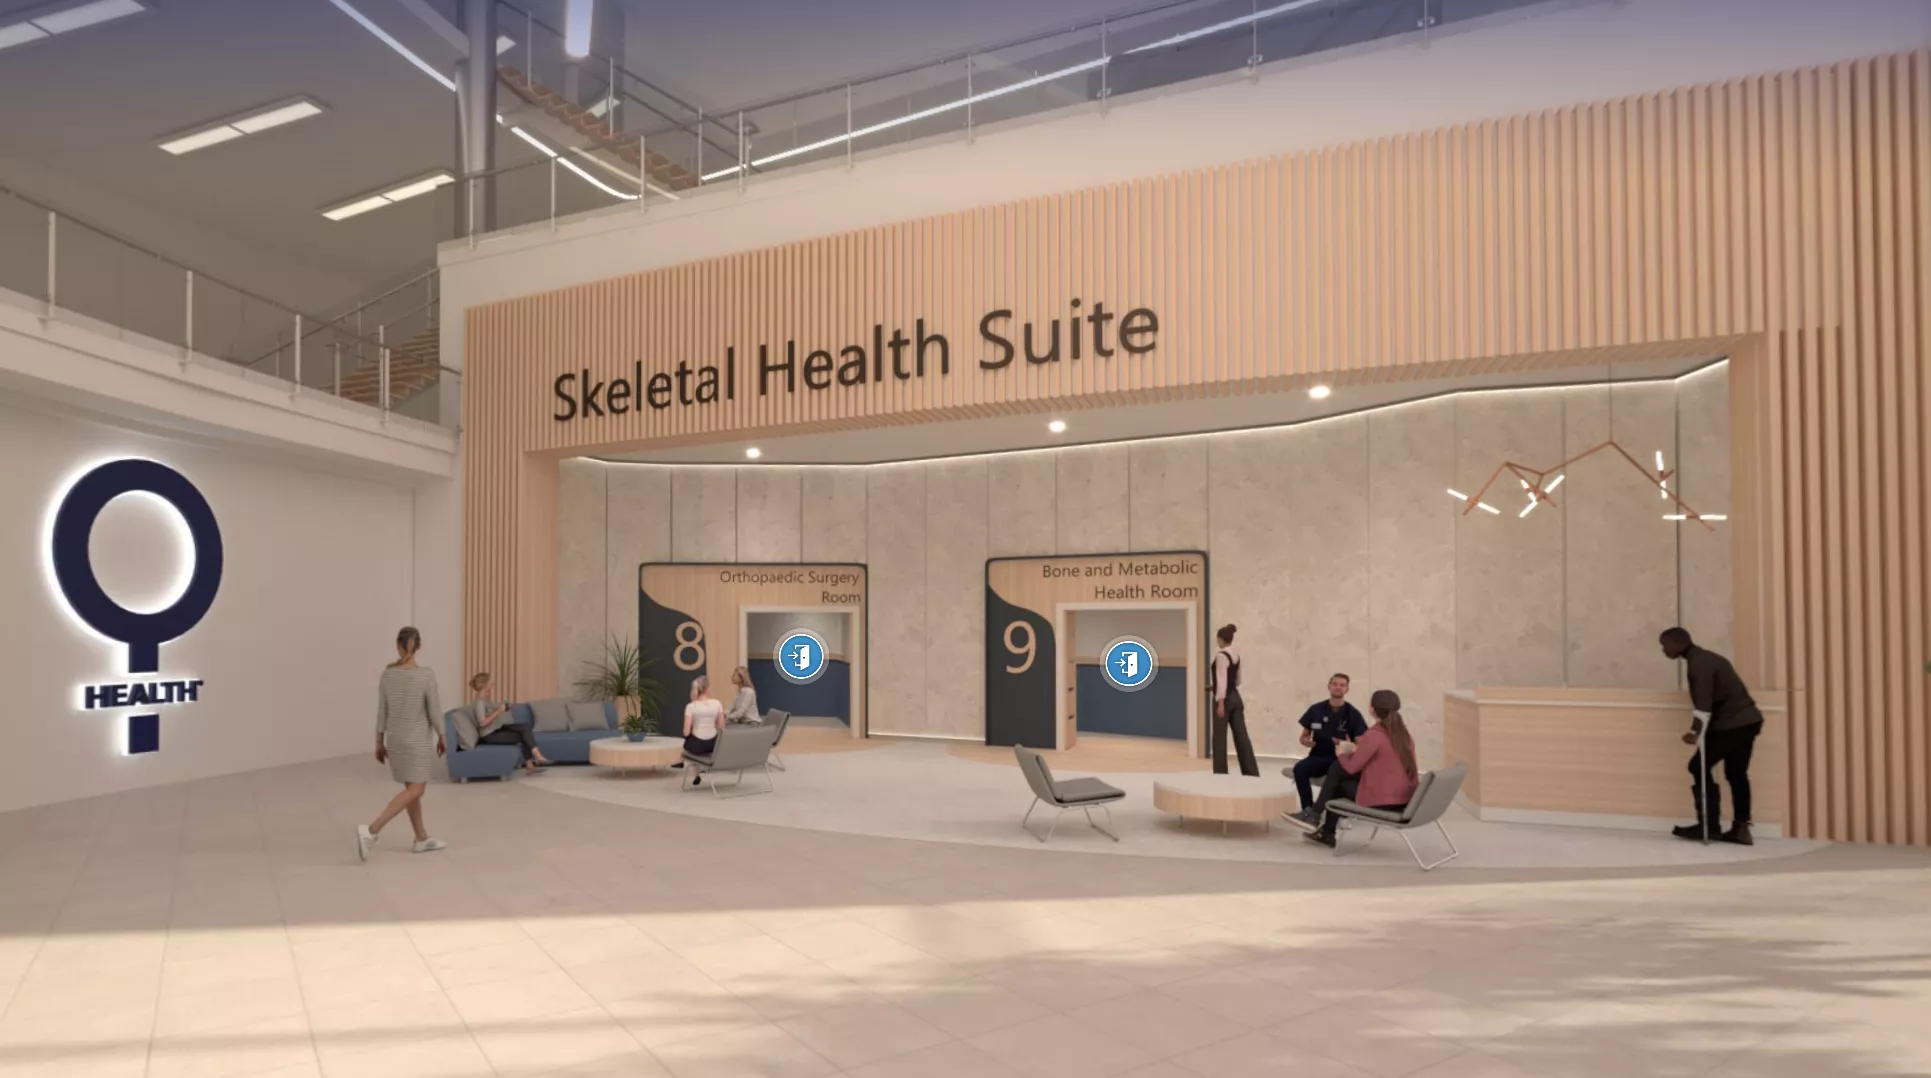 Interior image of virtual hospital showing skeletal health suite